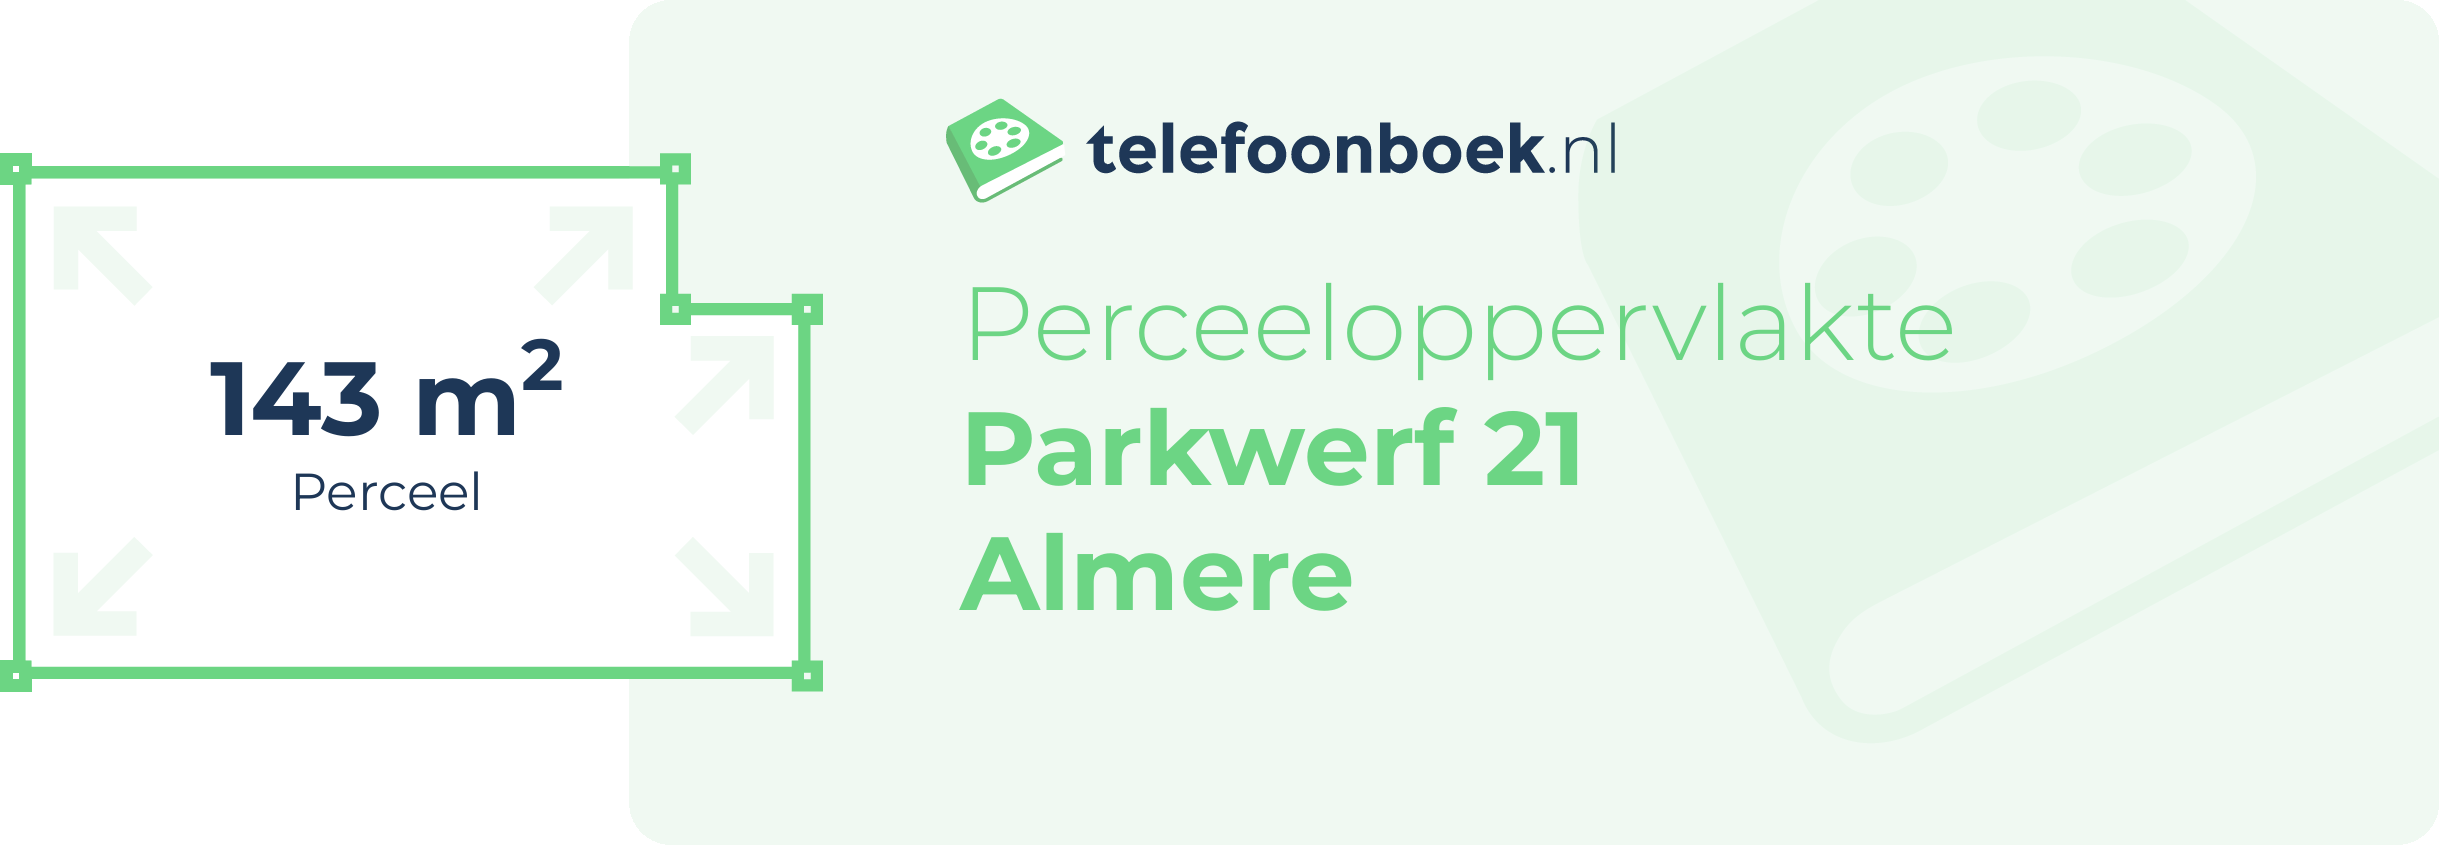 Perceeloppervlakte Parkwerf 21 Almere